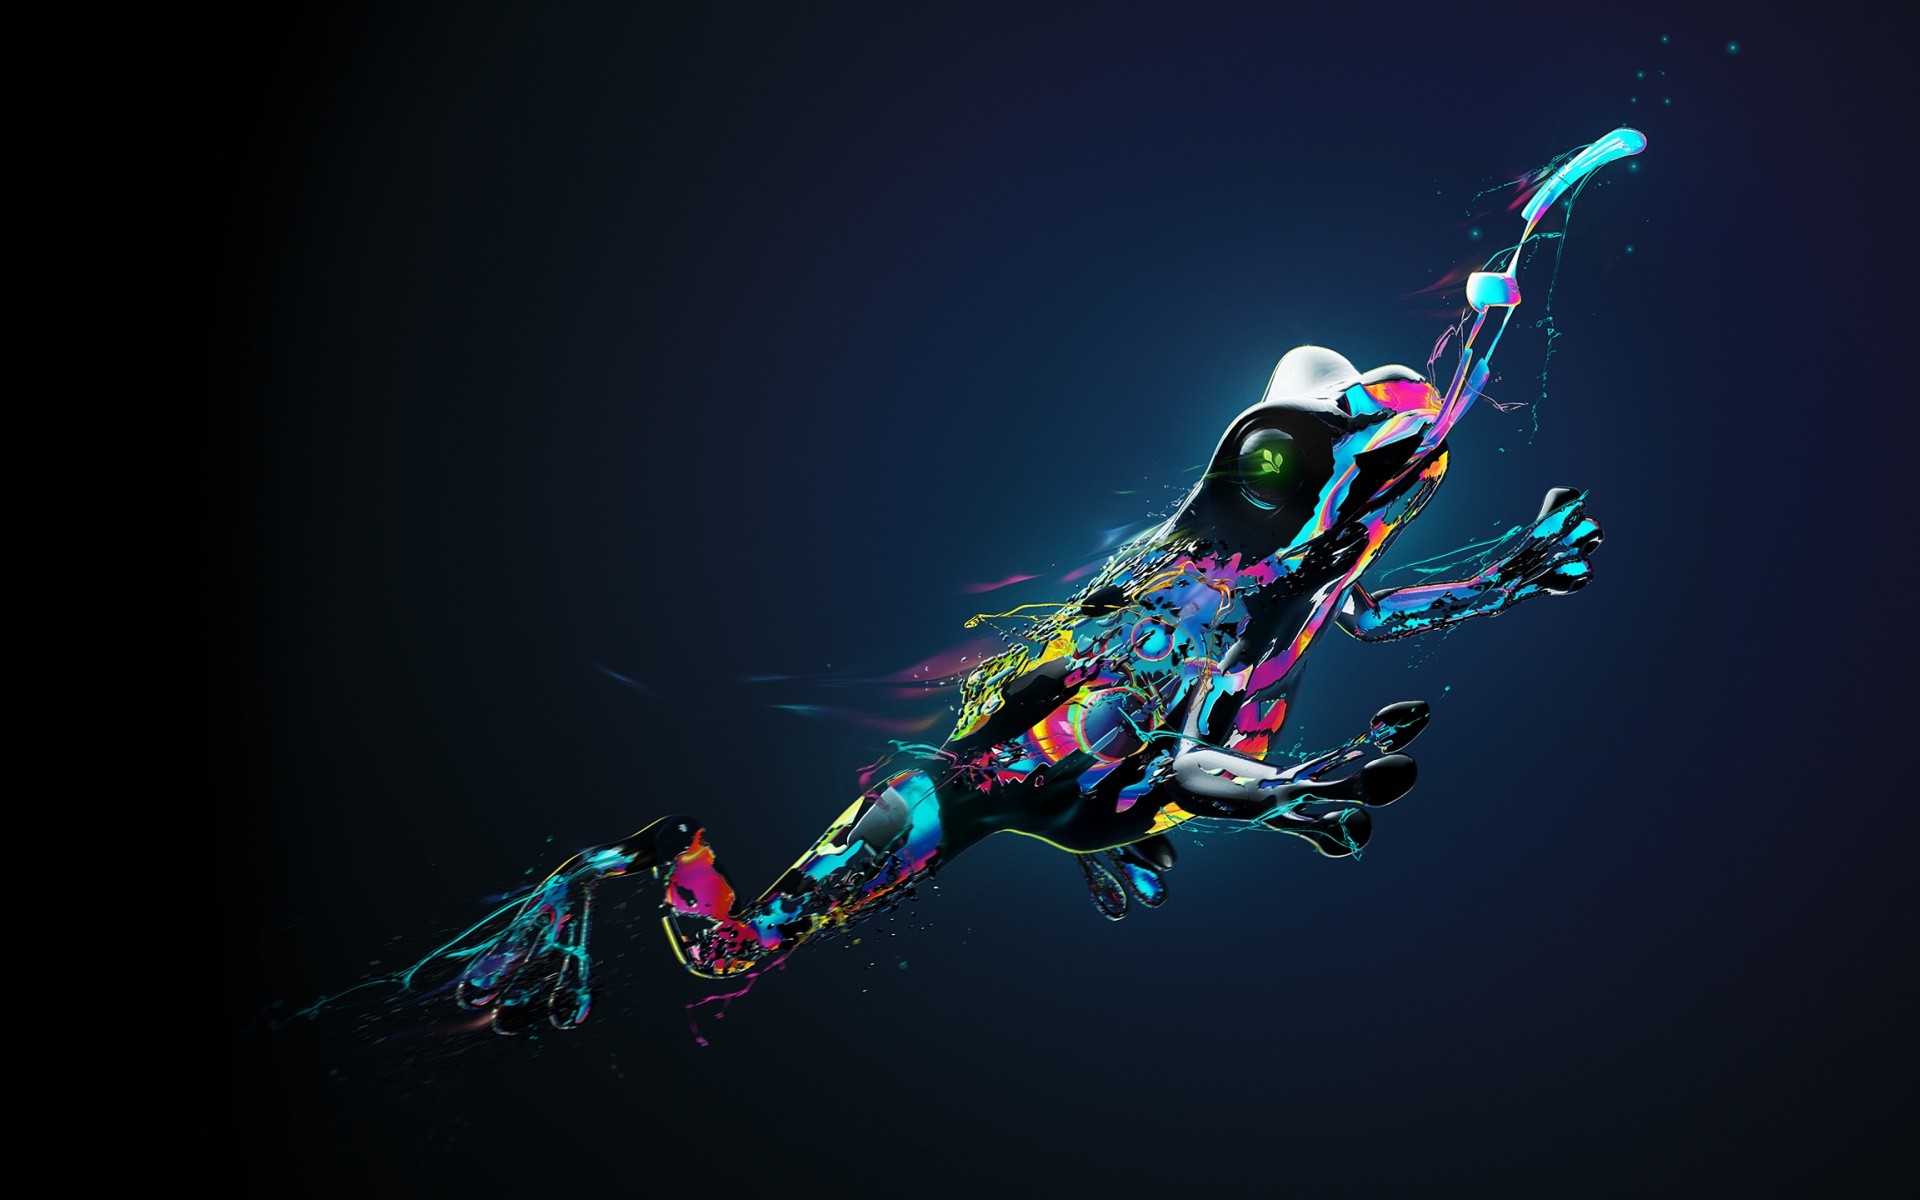 frog, Desktopography, Digital Art, Paint Splatter, Colorful Wallpaper